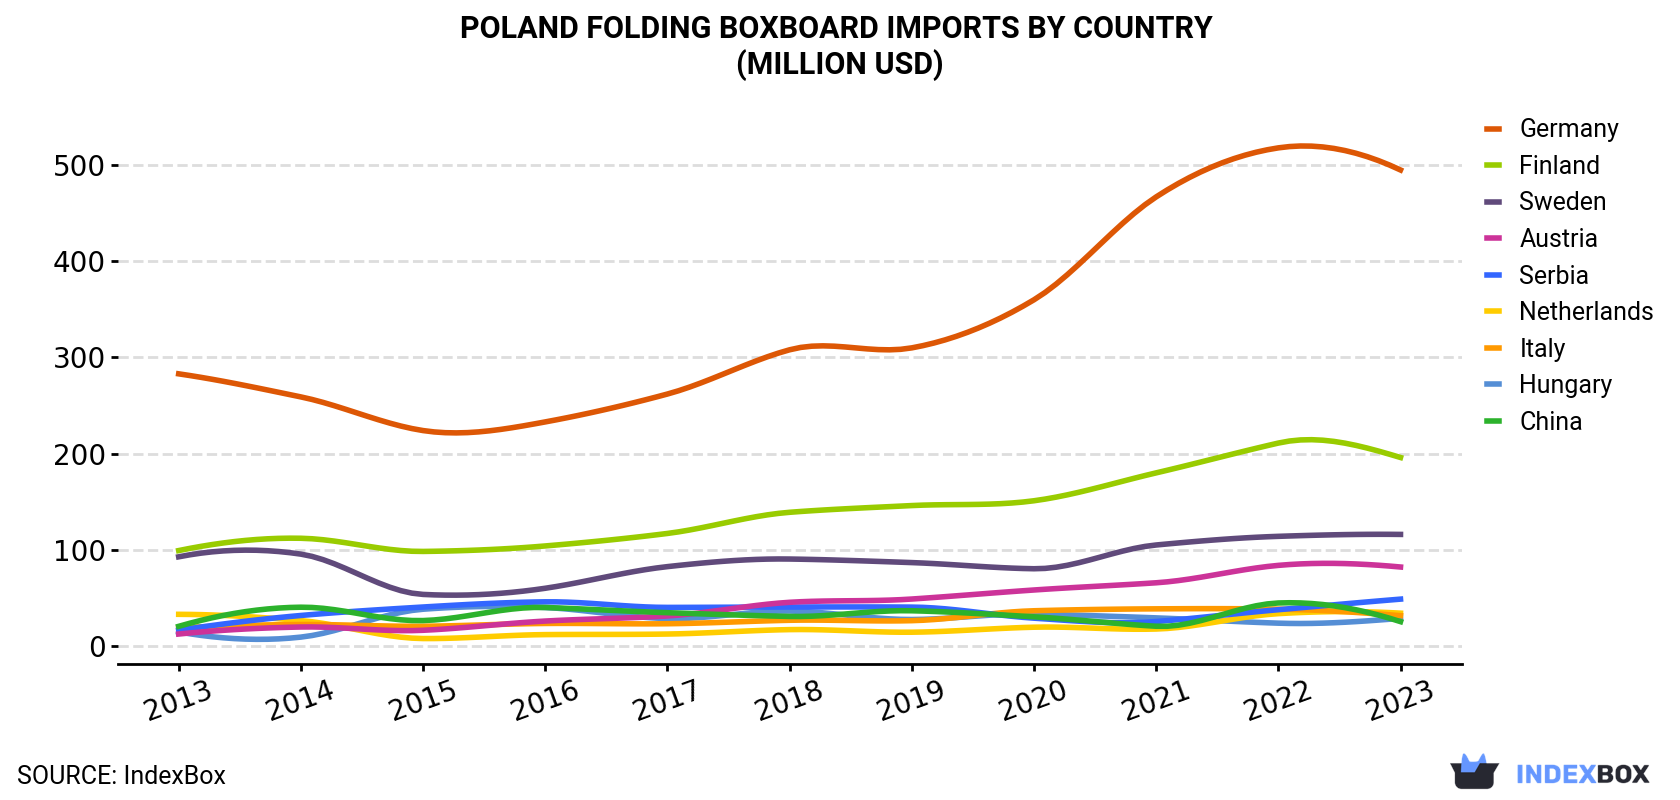 Poland Folding Boxboard Imports By Country (Million USD)